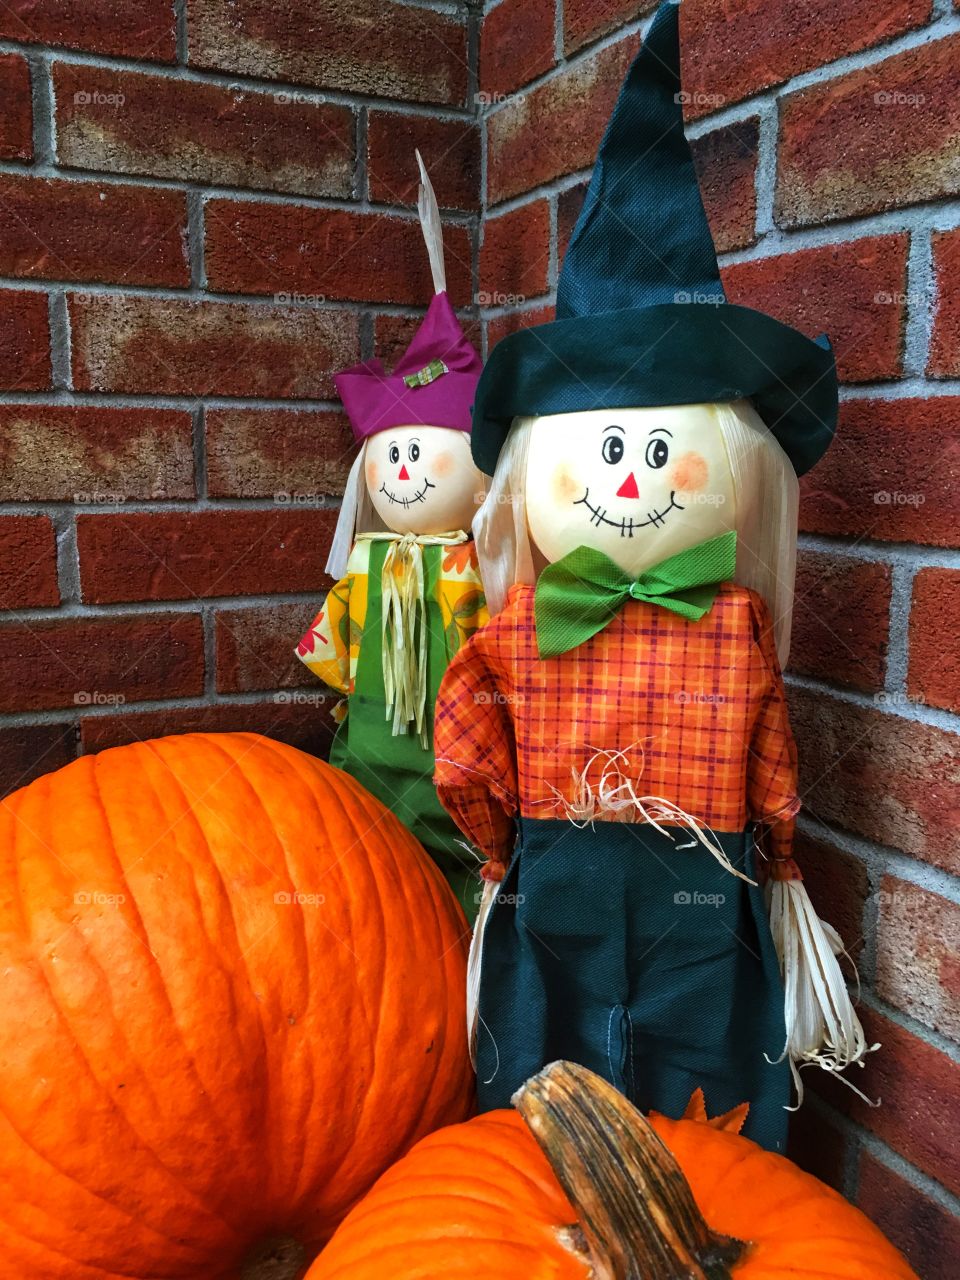 Fall Halloween scarecrow decorations